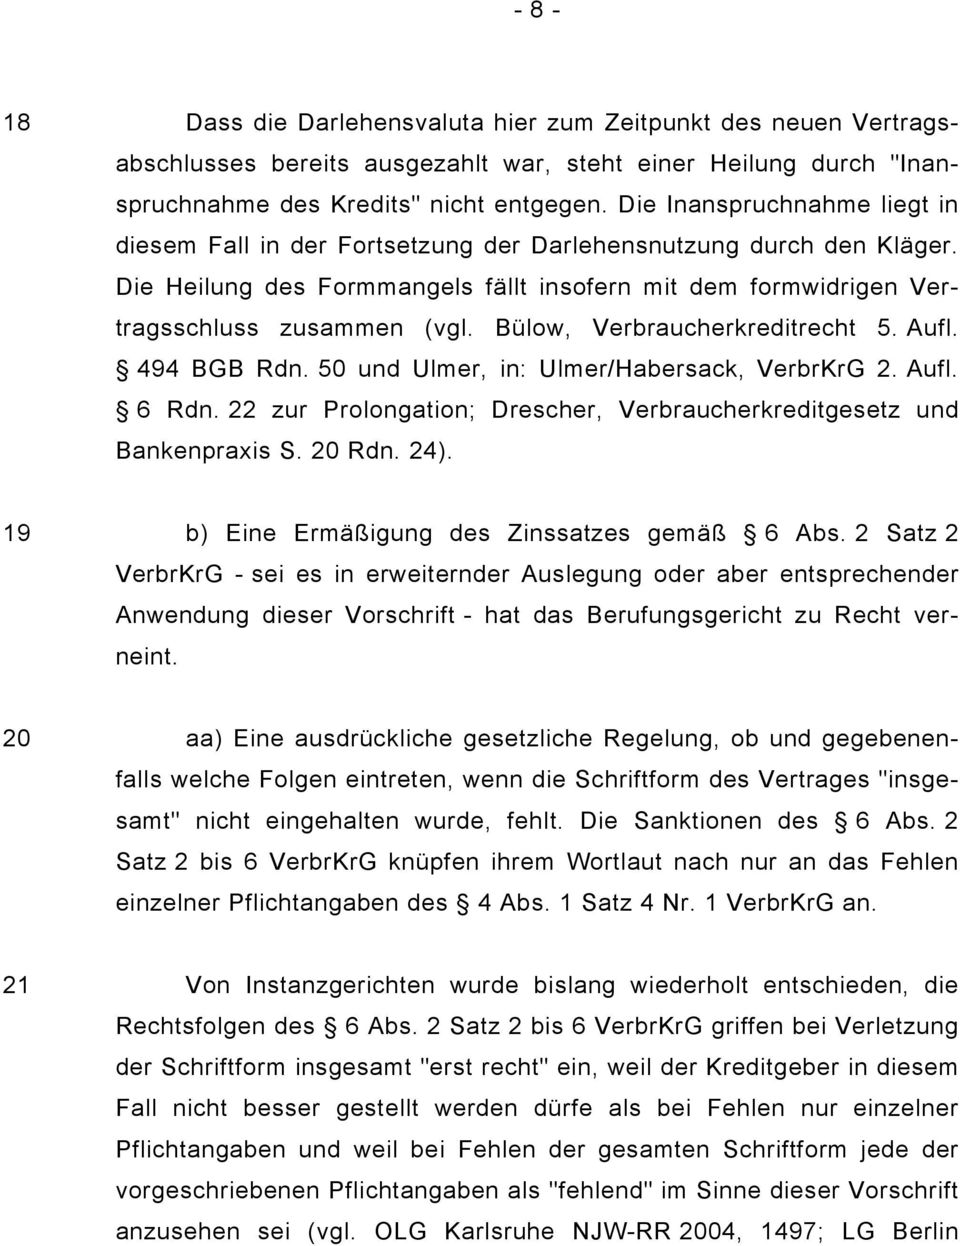 Bülow, Verbraucherkreditrecht 5. Aufl. 494 BGB Rdn. 50 und Ulmer, in: Ulmer/Habersack, VerbrKrG 2. Aufl. 6 Rdn. 22 zur Prolongation; Drescher, Verbraucherkreditgesetz und Bankenpraxis S. 20 Rdn. 24).